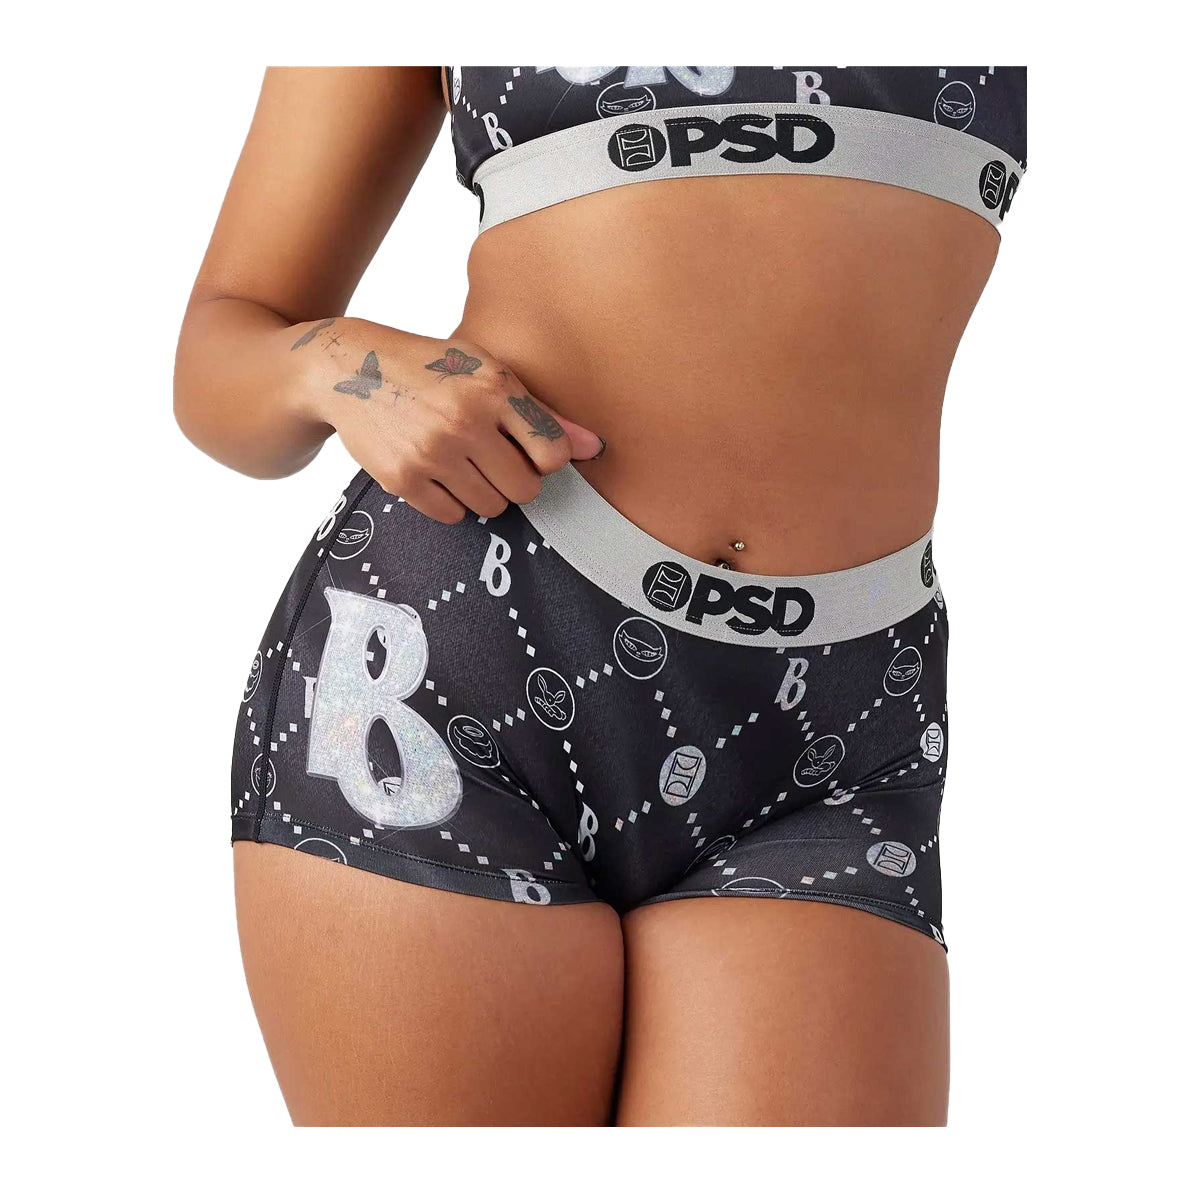 PSD Women's Bratz Boy Shorts - Full Coverage Women's Underwear -  Comfortable Stretch Panties for Women, Multi